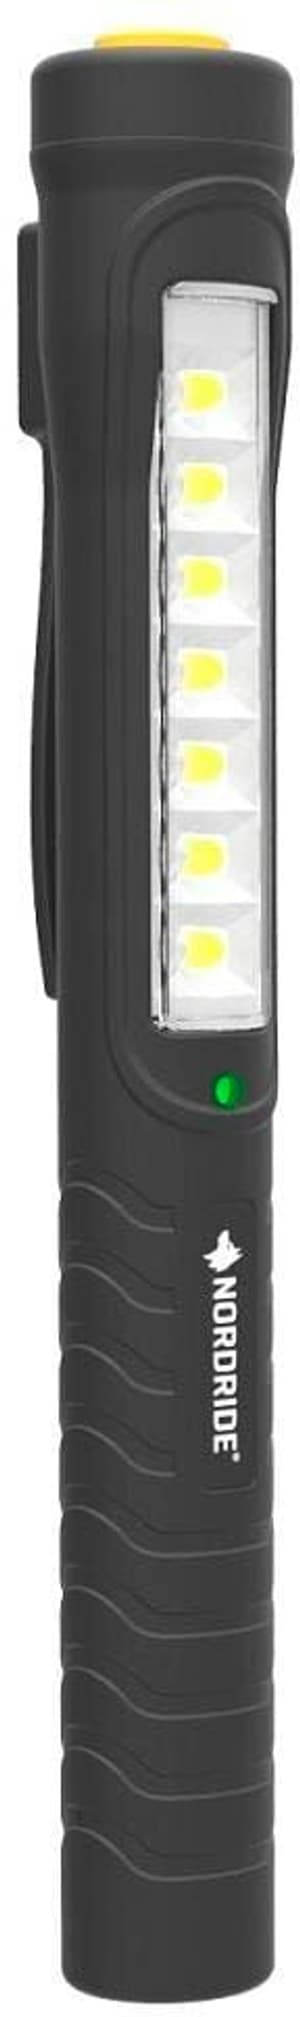 Lampada a mano SMD LED Pen Light 90 lumen, IP20, con magnete